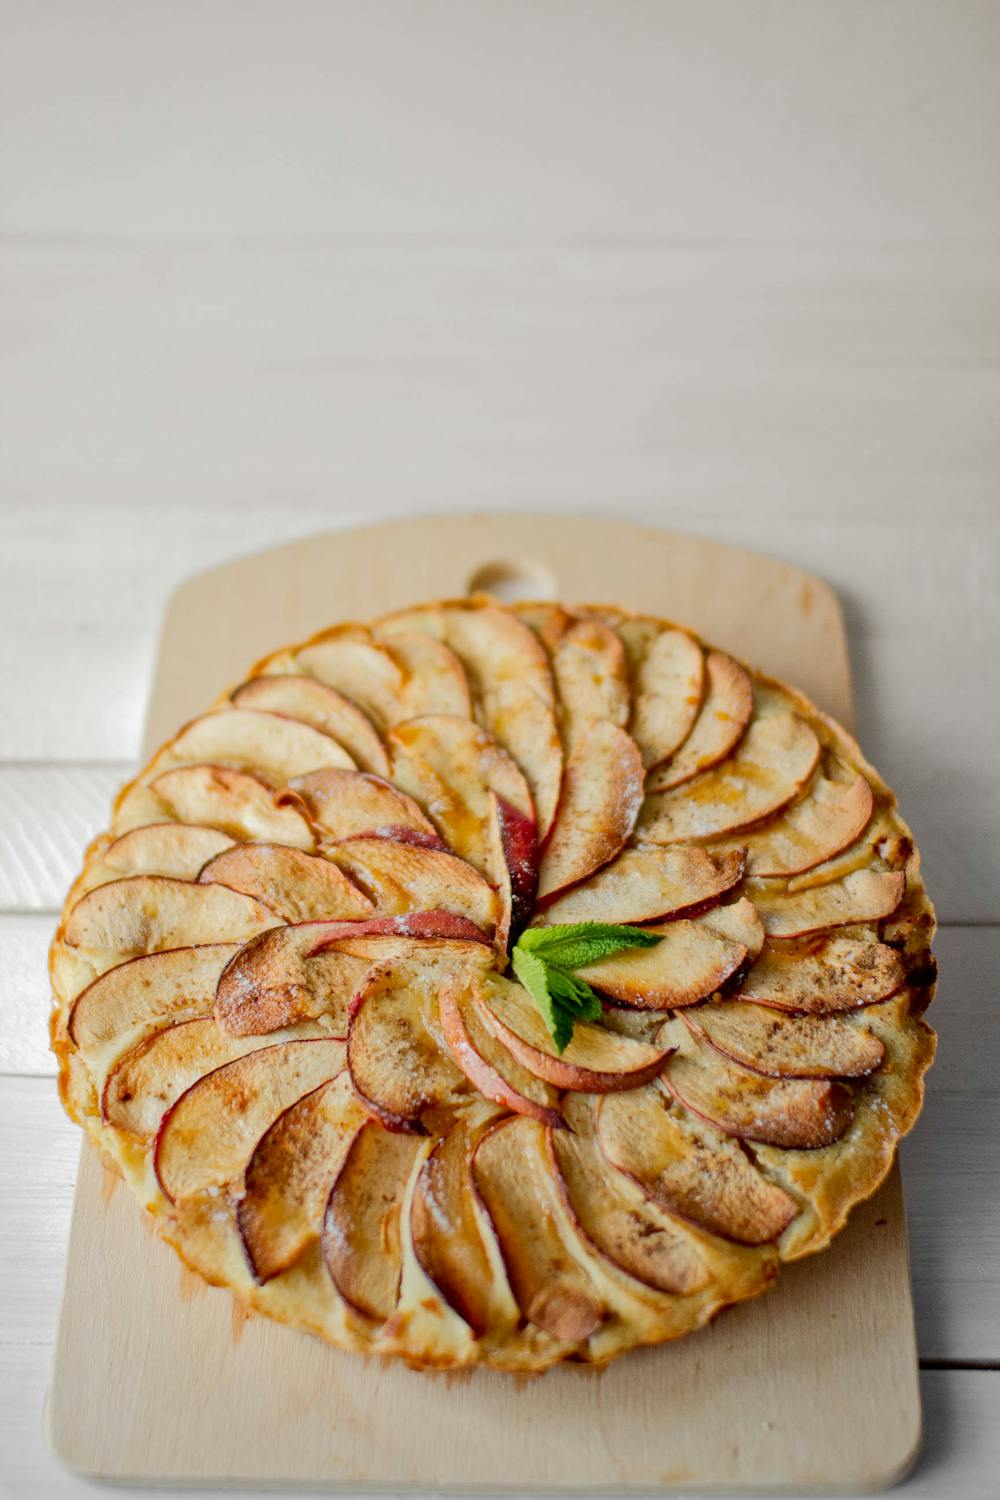 Kitchen Necessities to Bake a Delicious Apple Pie